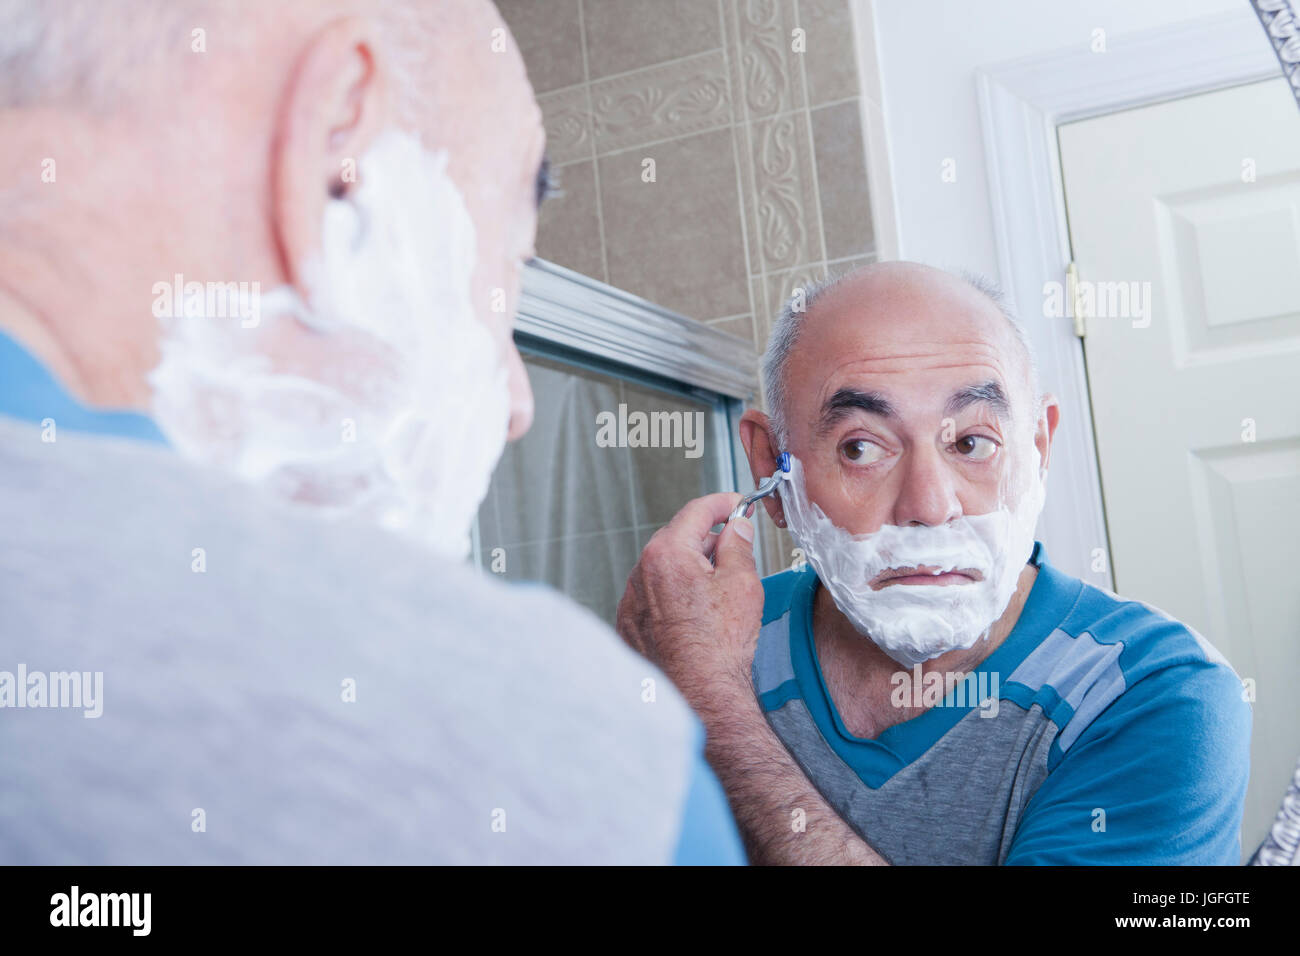 Reflection of Hispanic man shaving face in mirror Stock Photo